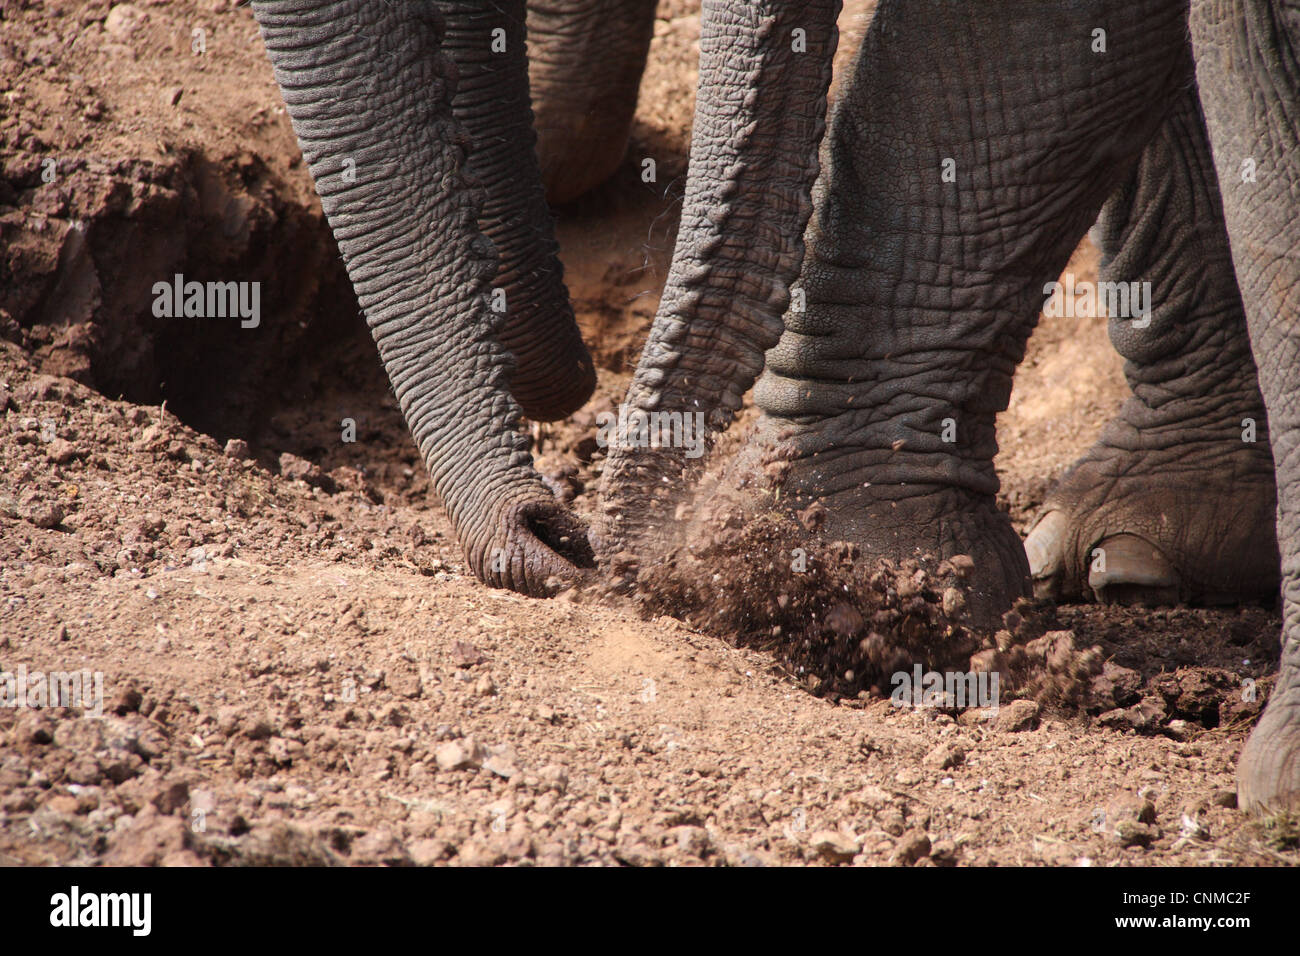 African Elephant Loxodonta africana adults calves close-up trunks feet picking up feeding mineral salts salt lick Ark Aberdare Stock Photo